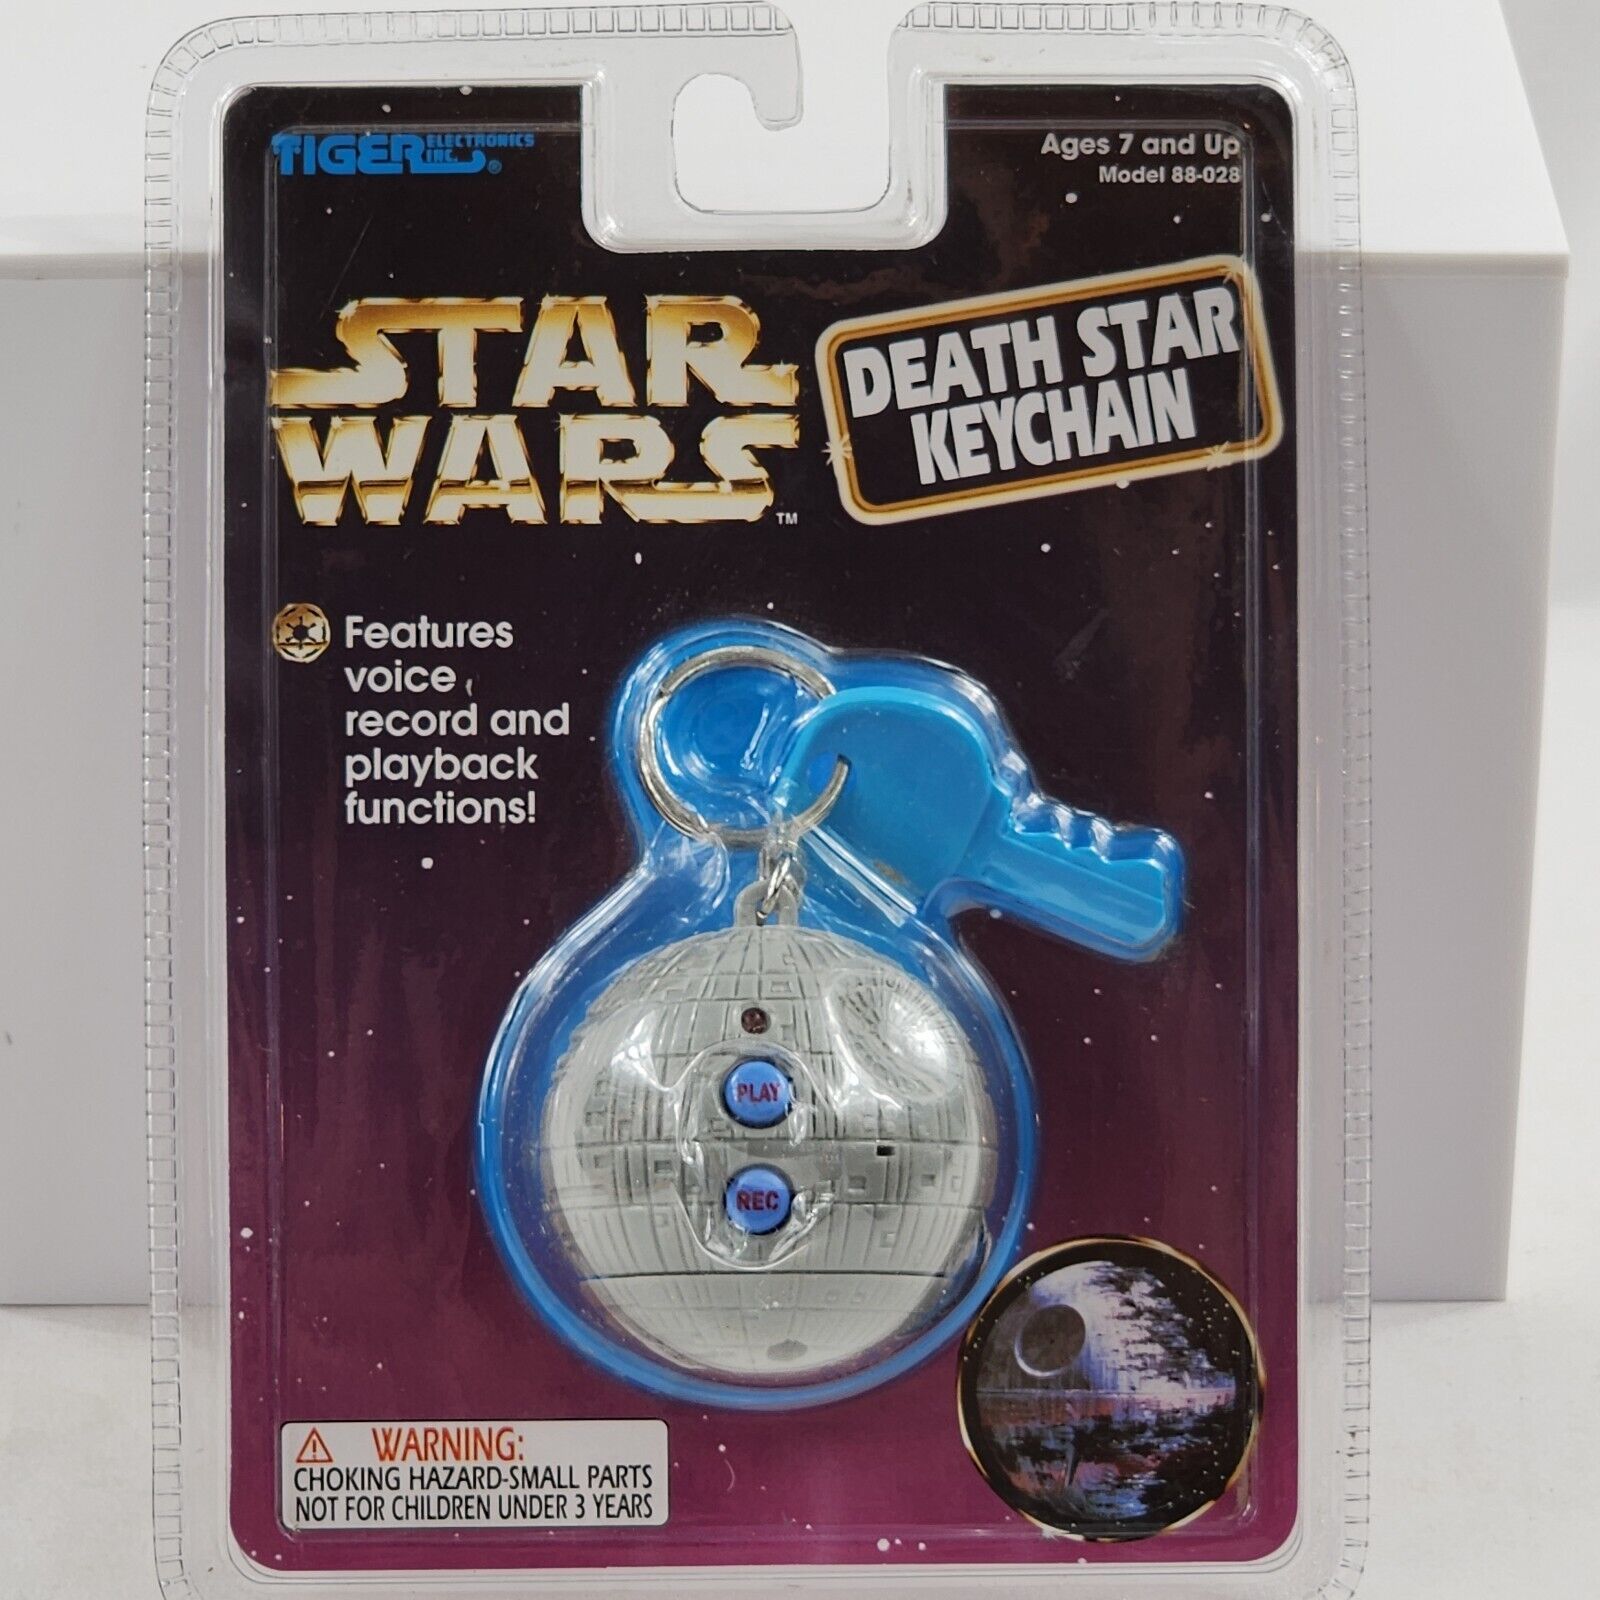 Vtg 1997 Star Wars Death Star Keychain Tiger Electronics Rare Voice Record New